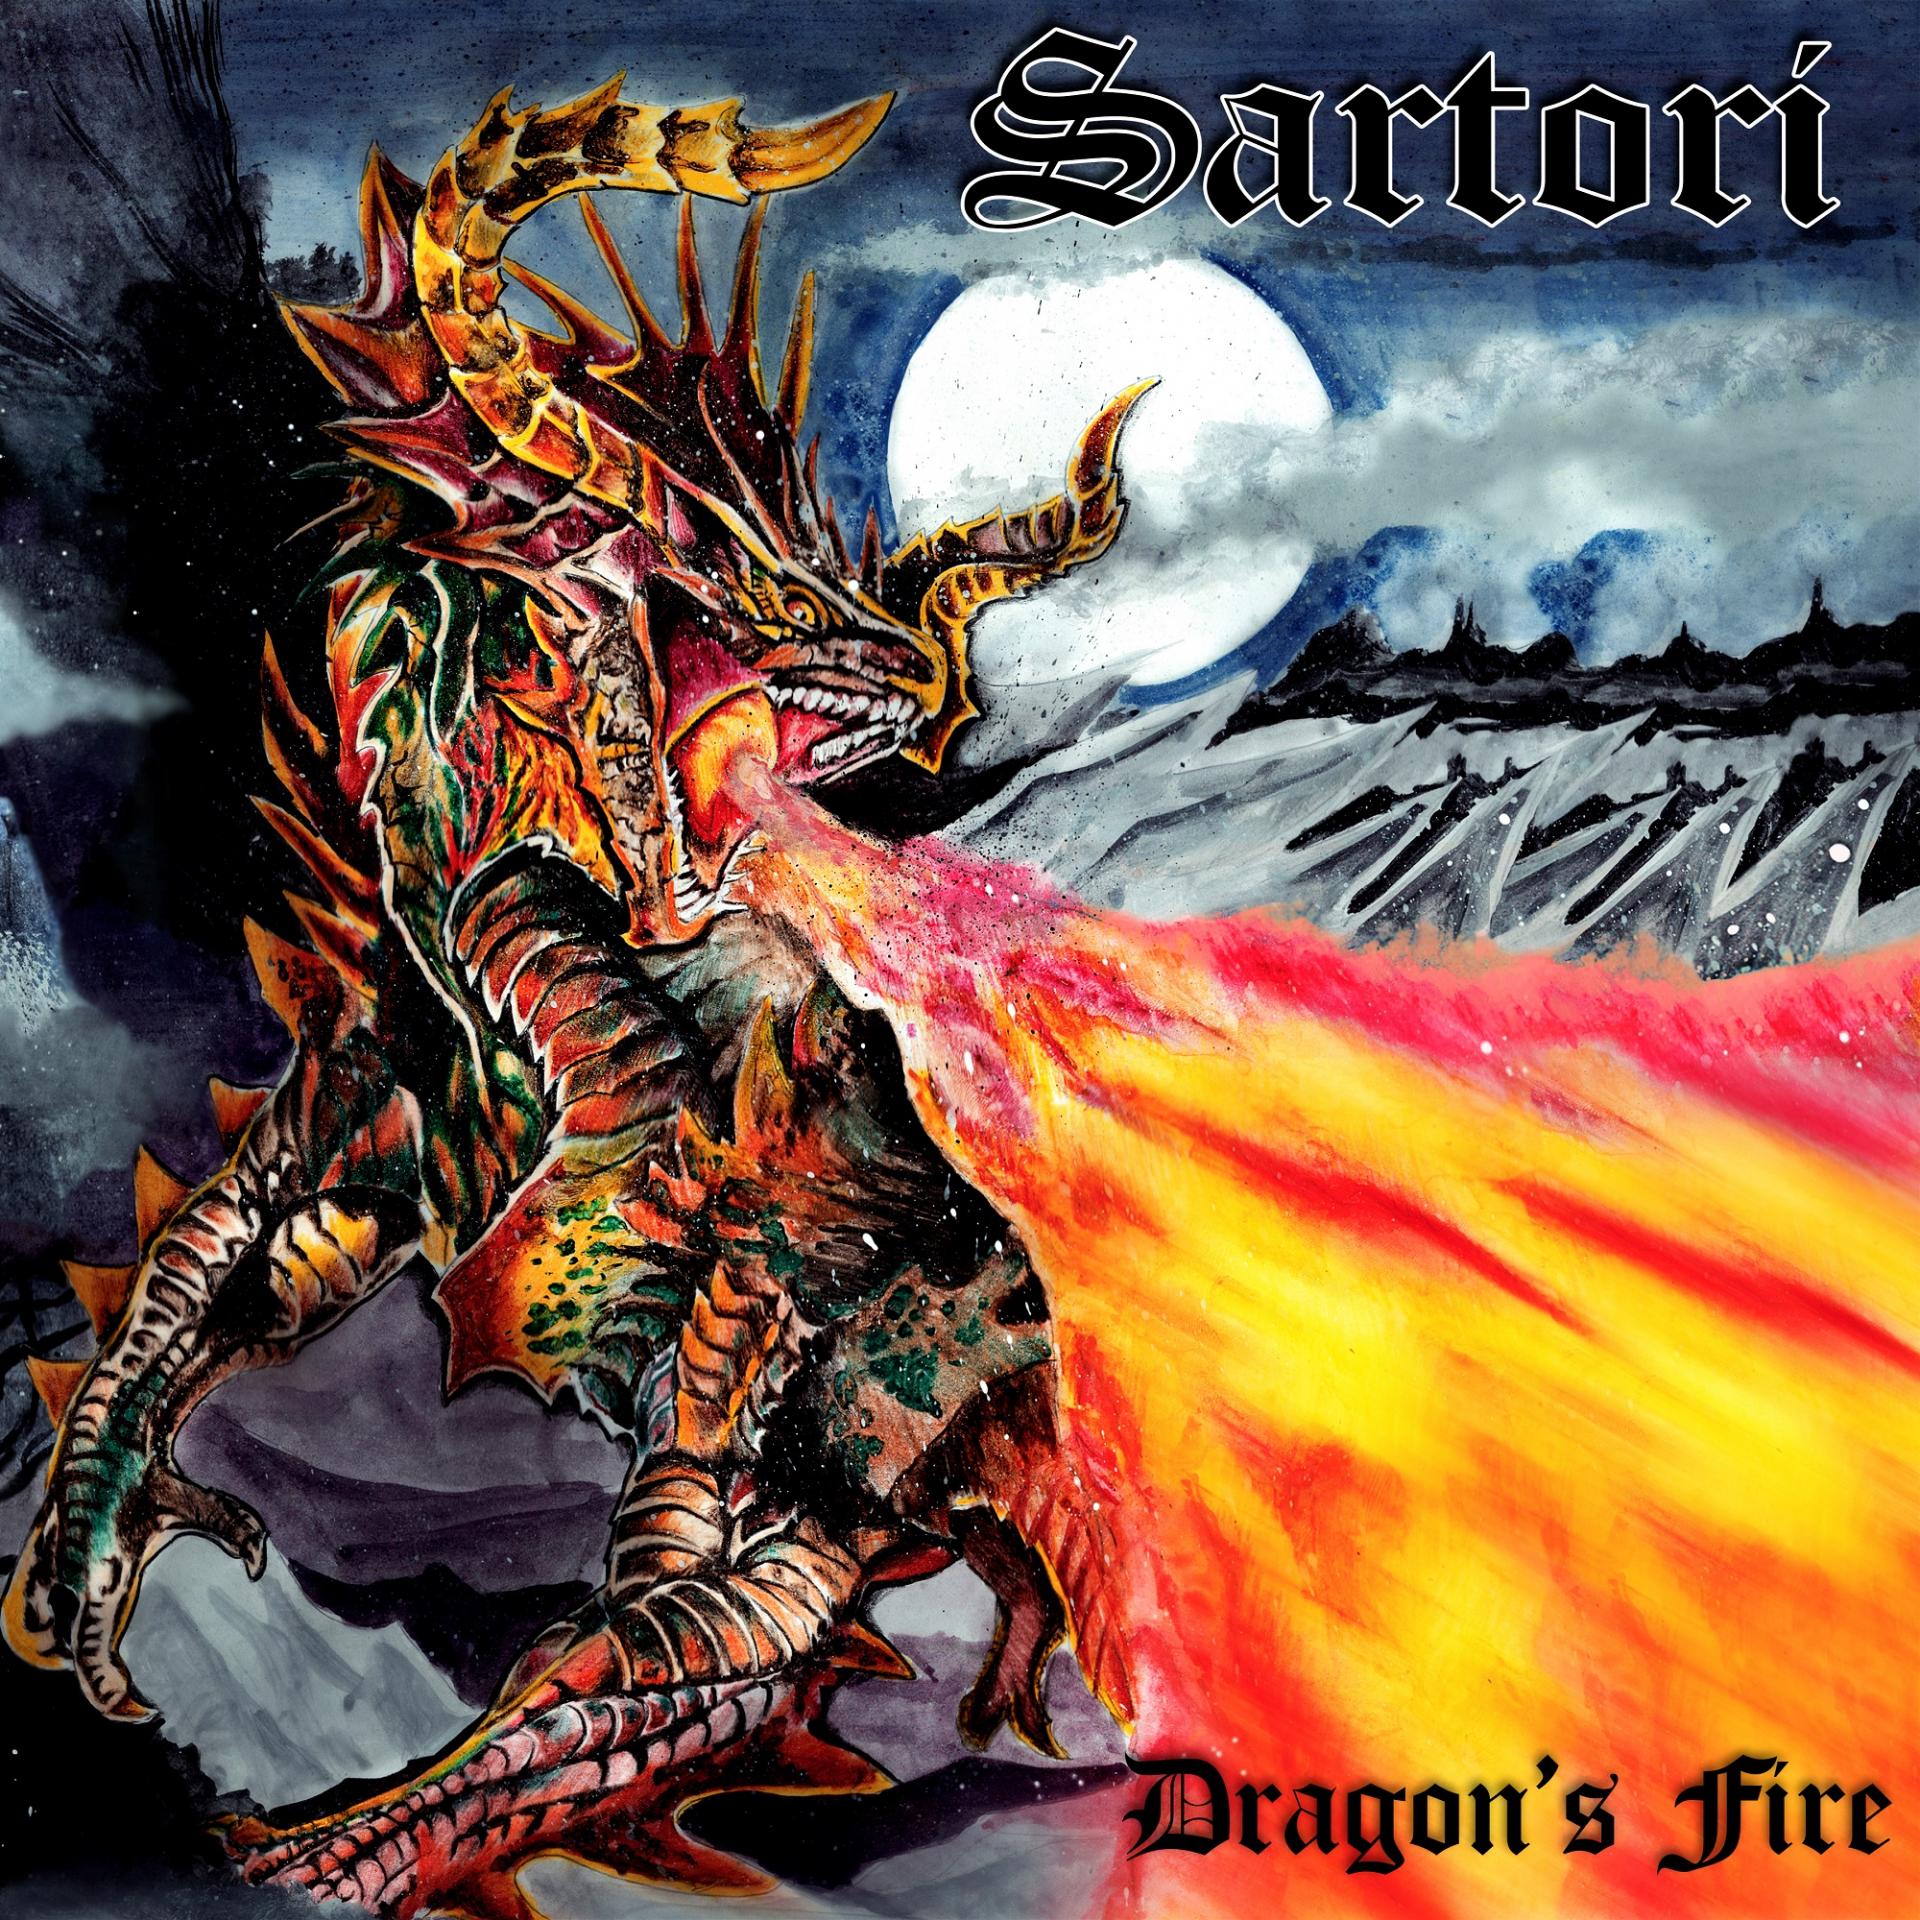 Sartori dragons fire cover art